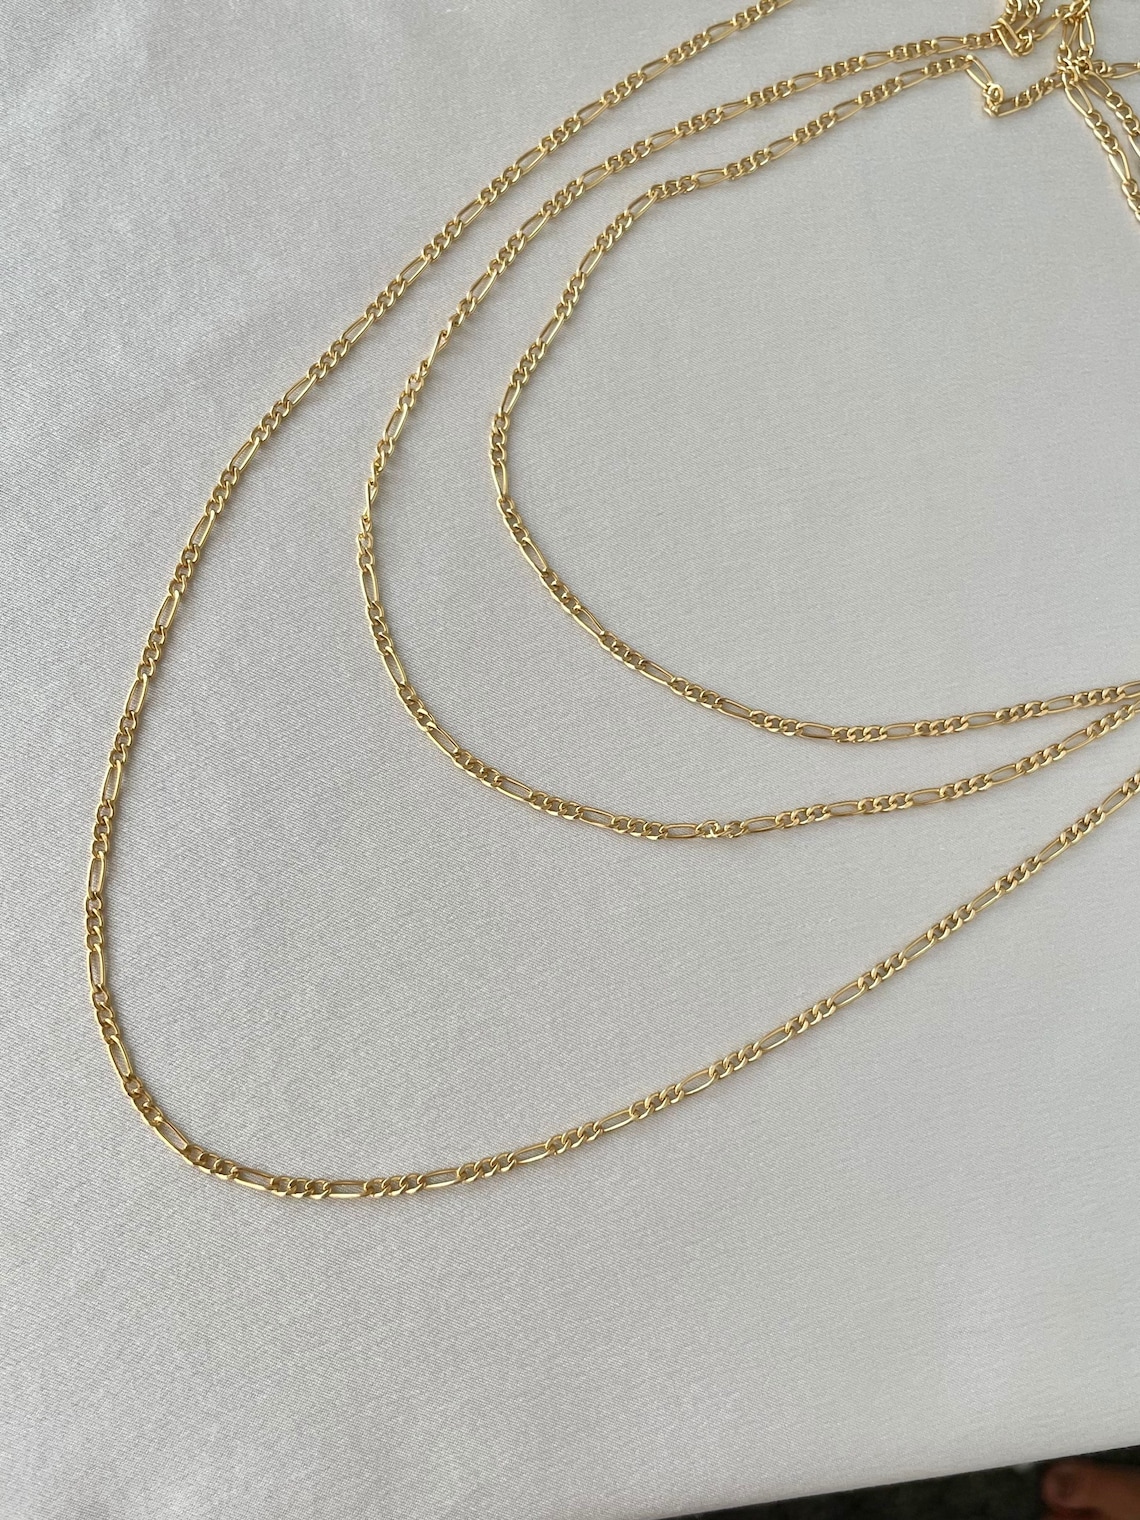 Figueroa 14k Gold Fill Chain Necklace | Etsy